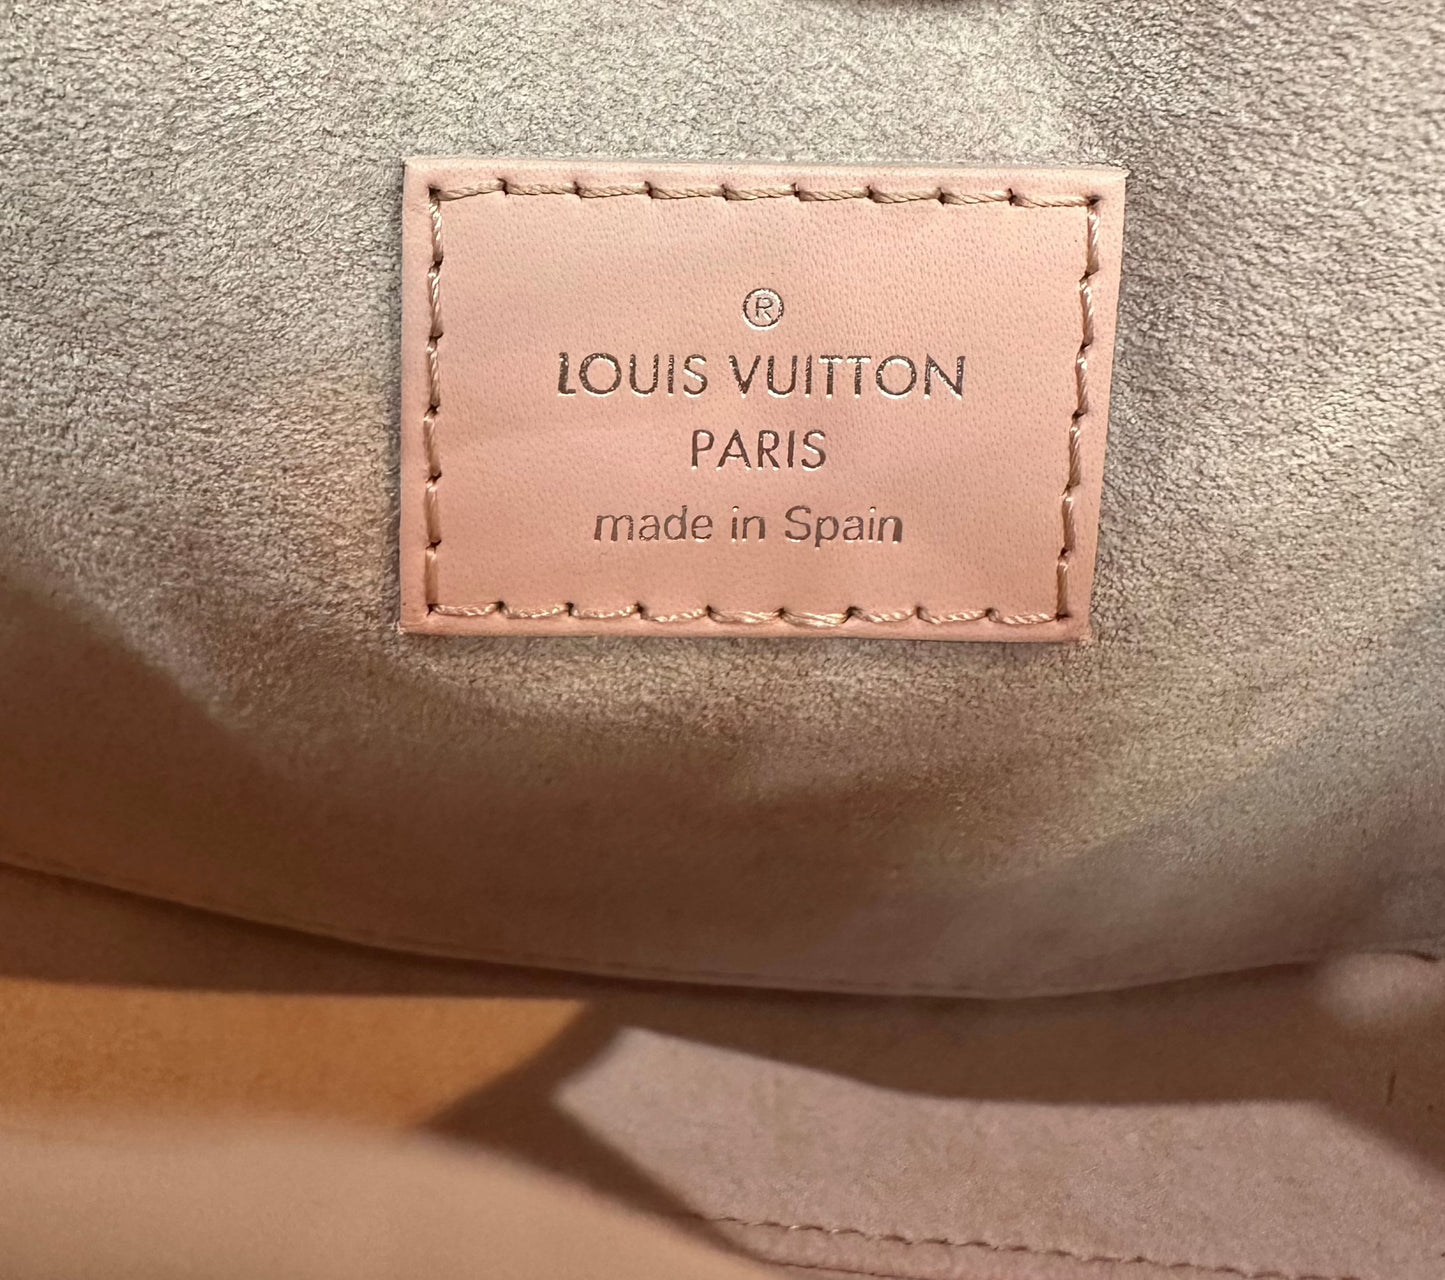 Louis Vuitton Paris made in Spain leather logo inside